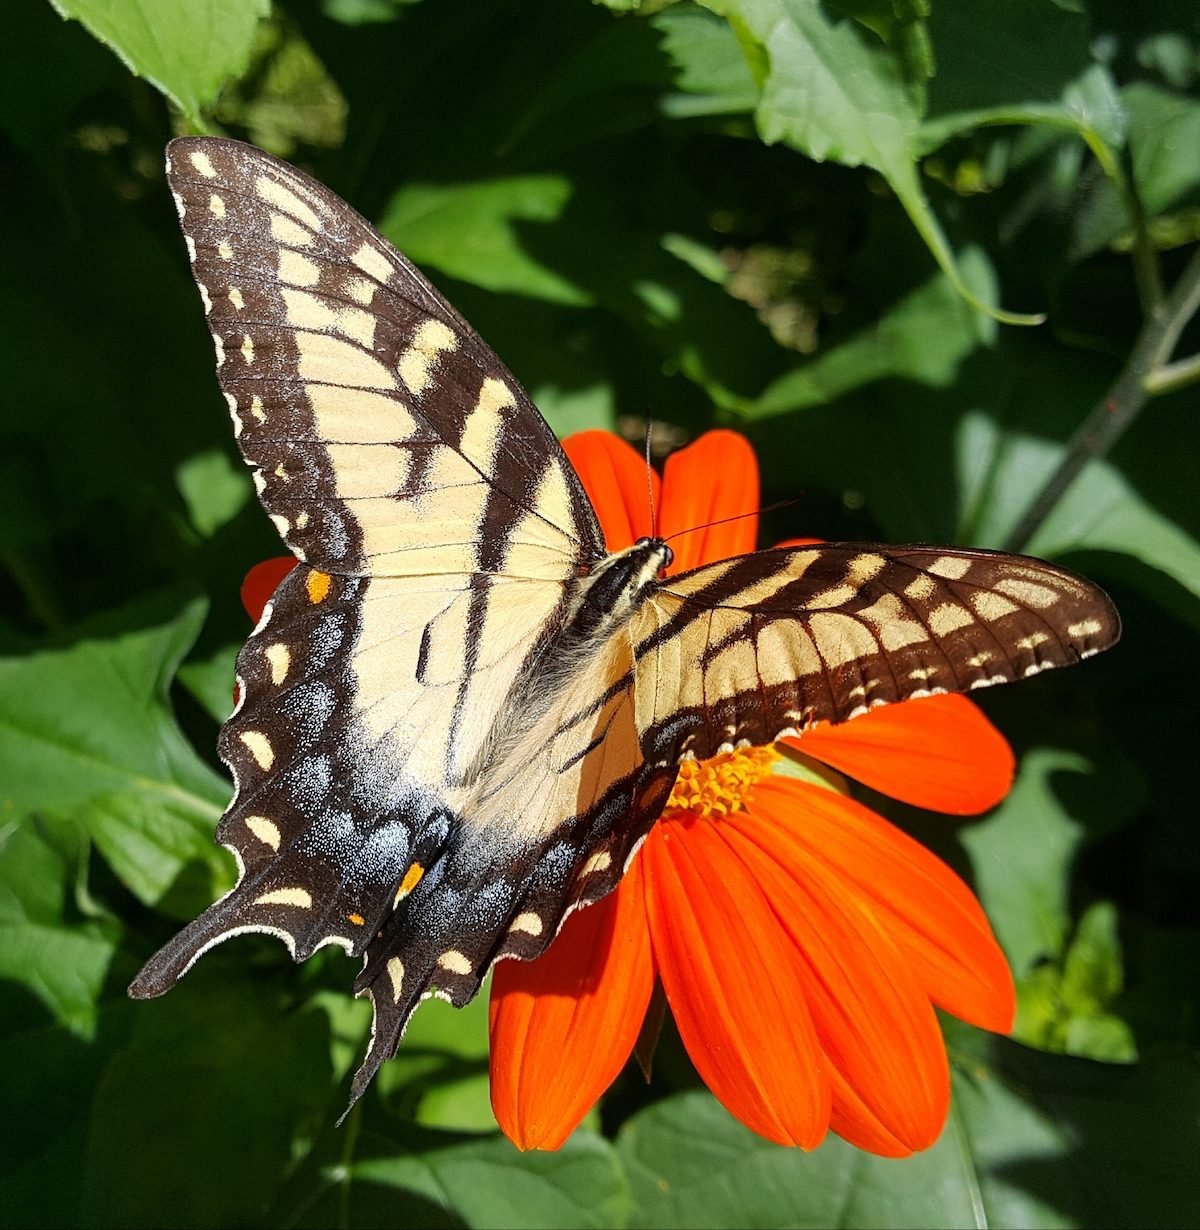 Blundering Gardener: Love butterflies? Learn how to feed caterpillars